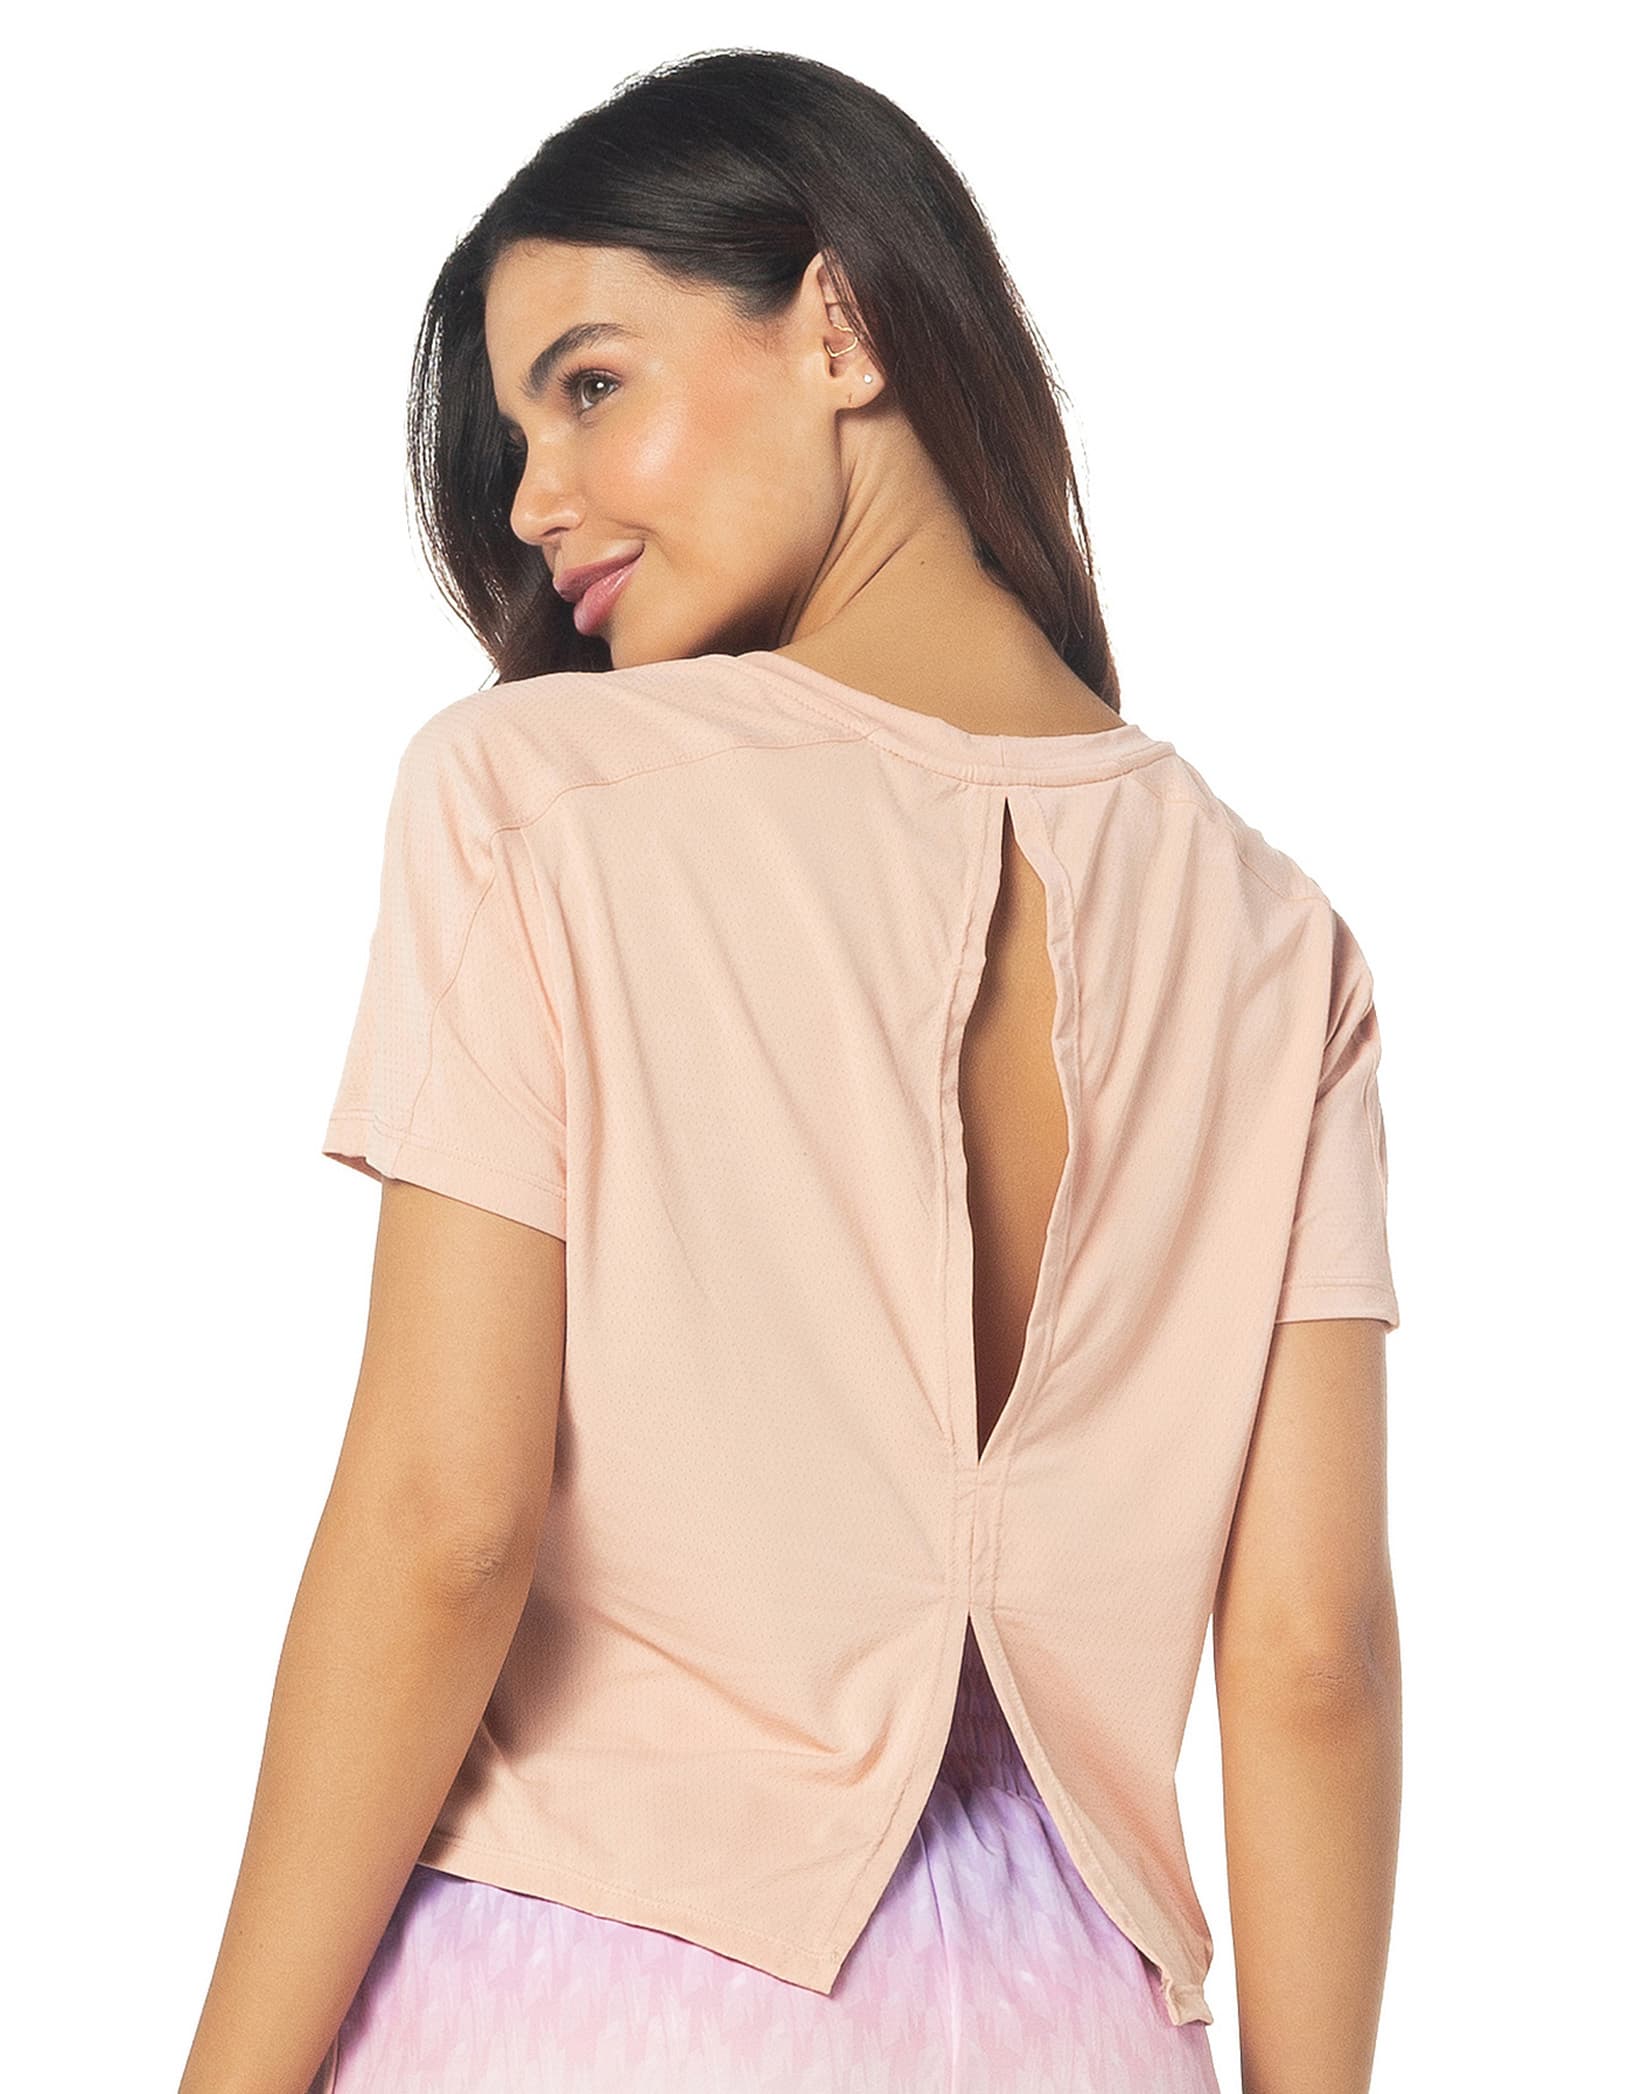 Vestem - Shirt Short Sleeve Dry Fit Peonia pink Romance - BMC599.C0243